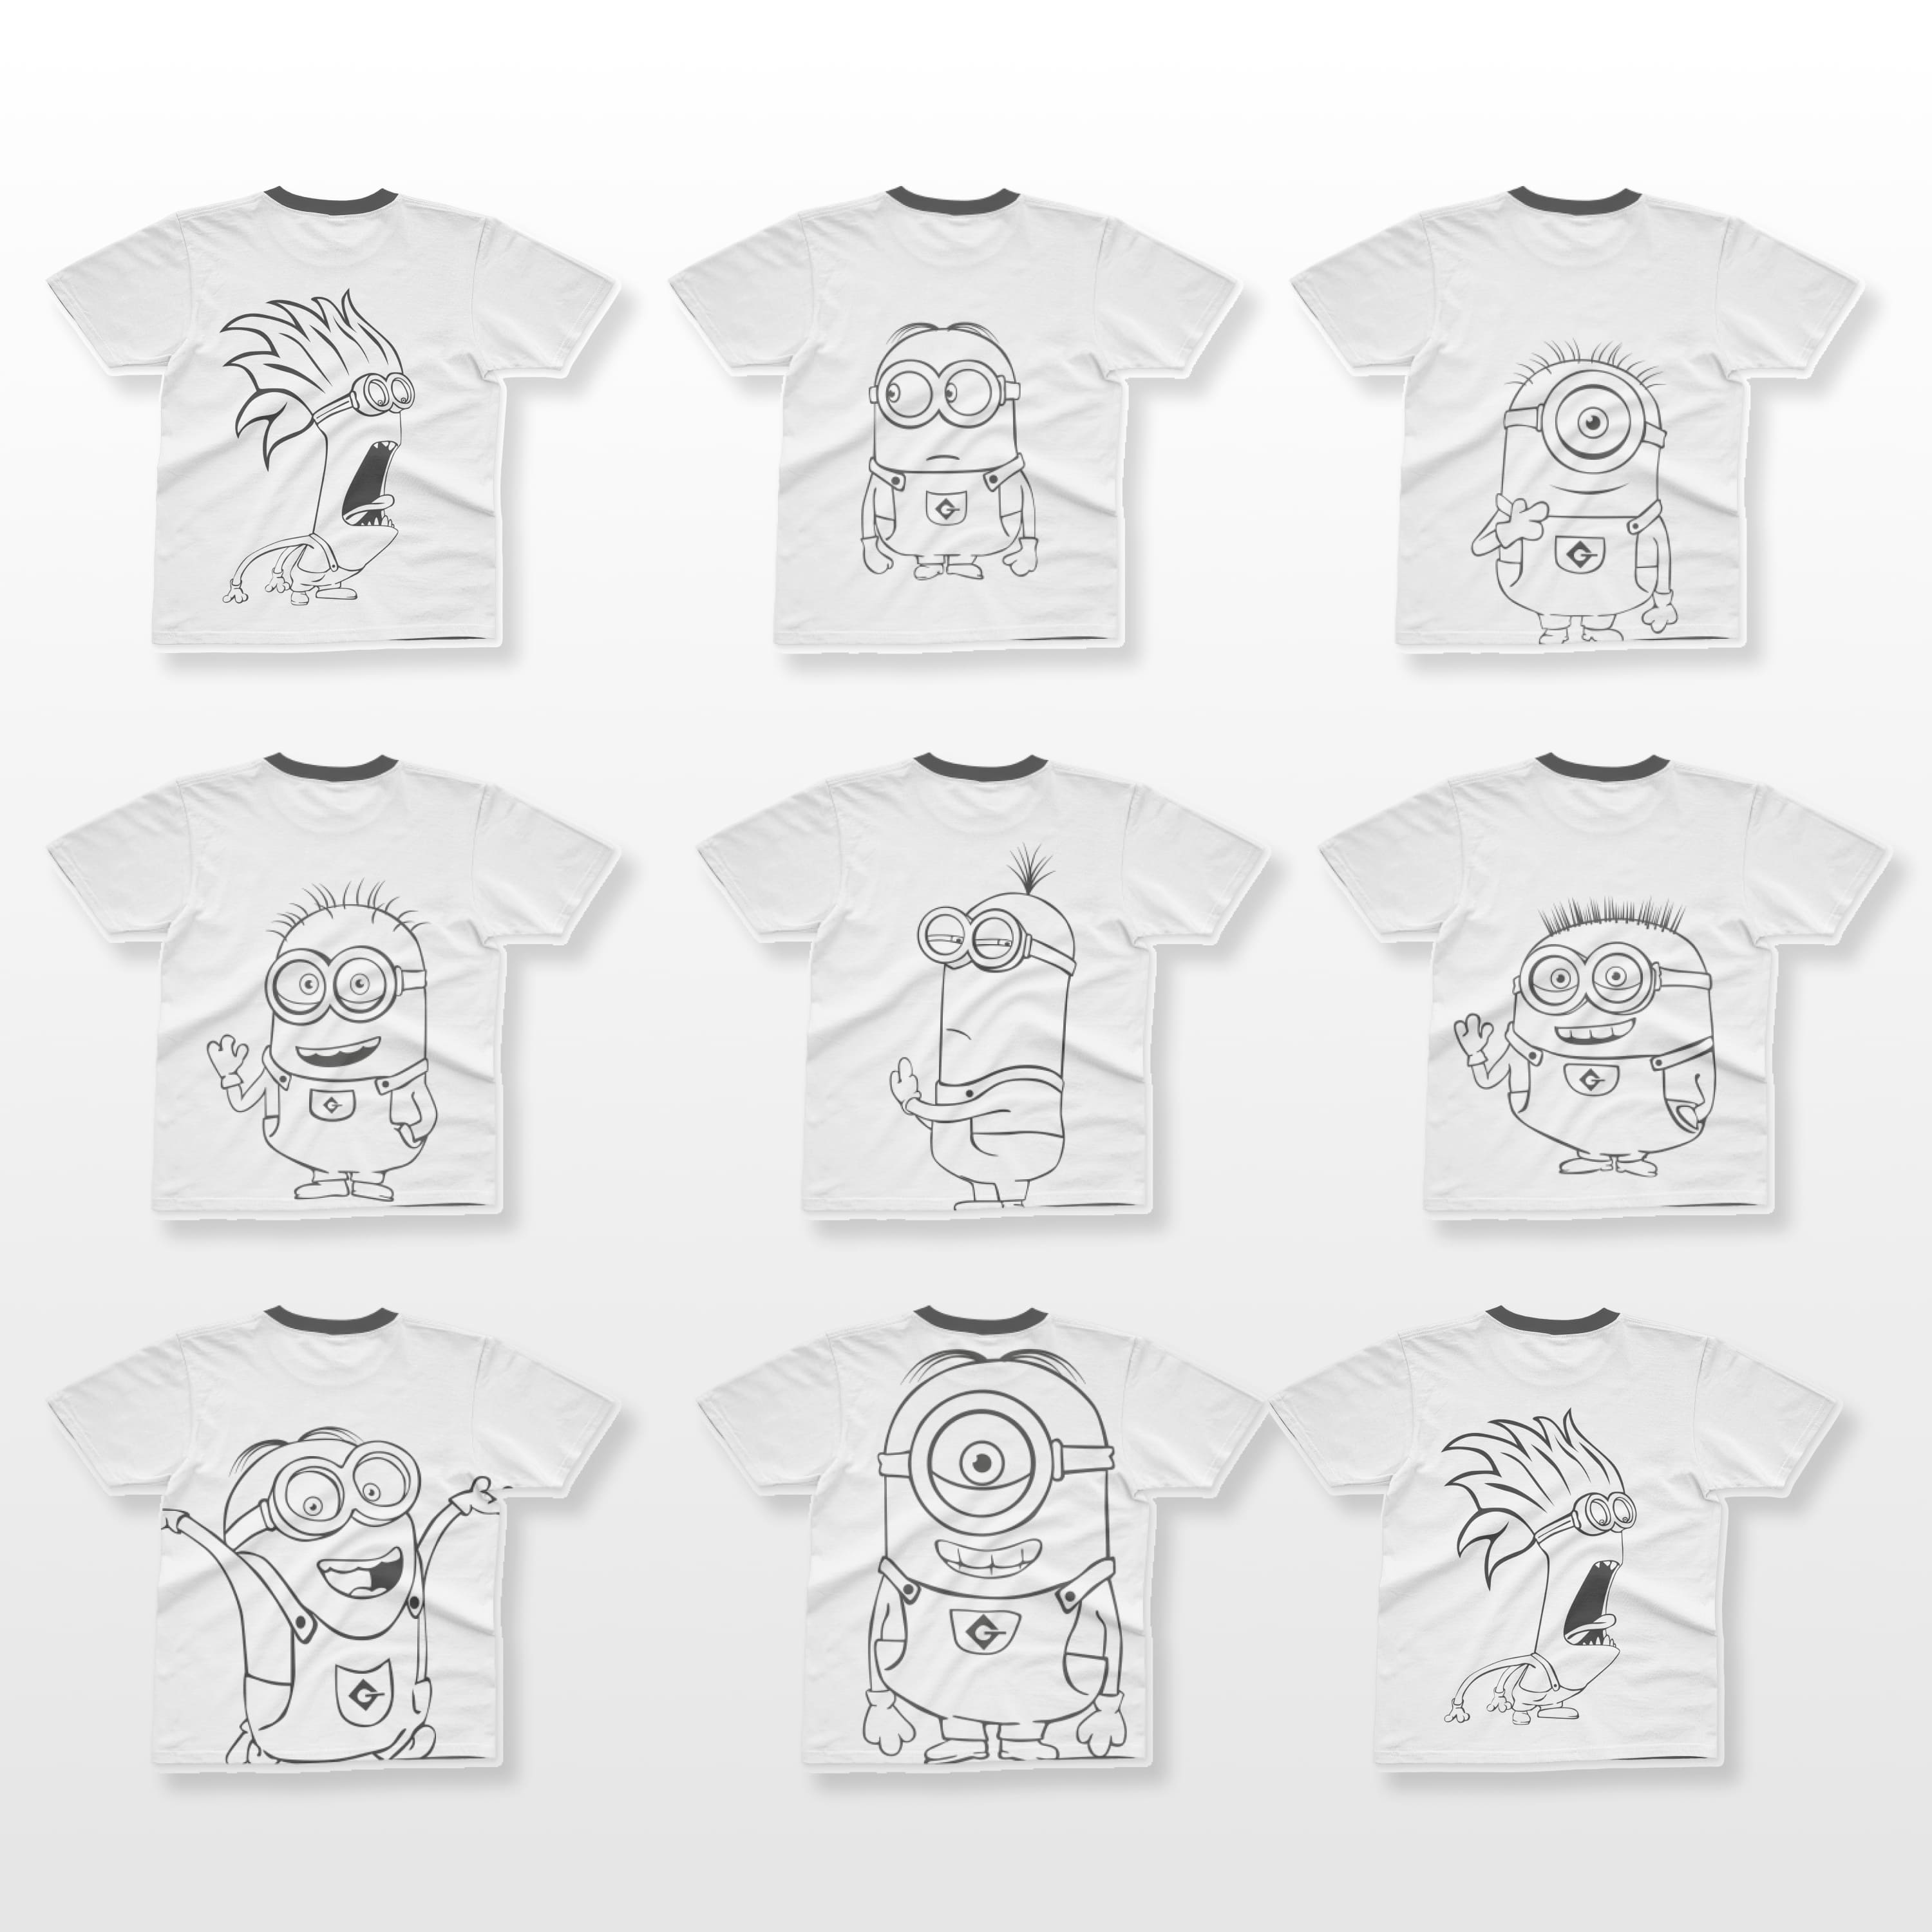 Outline Minion T-shirt Designs Cover.